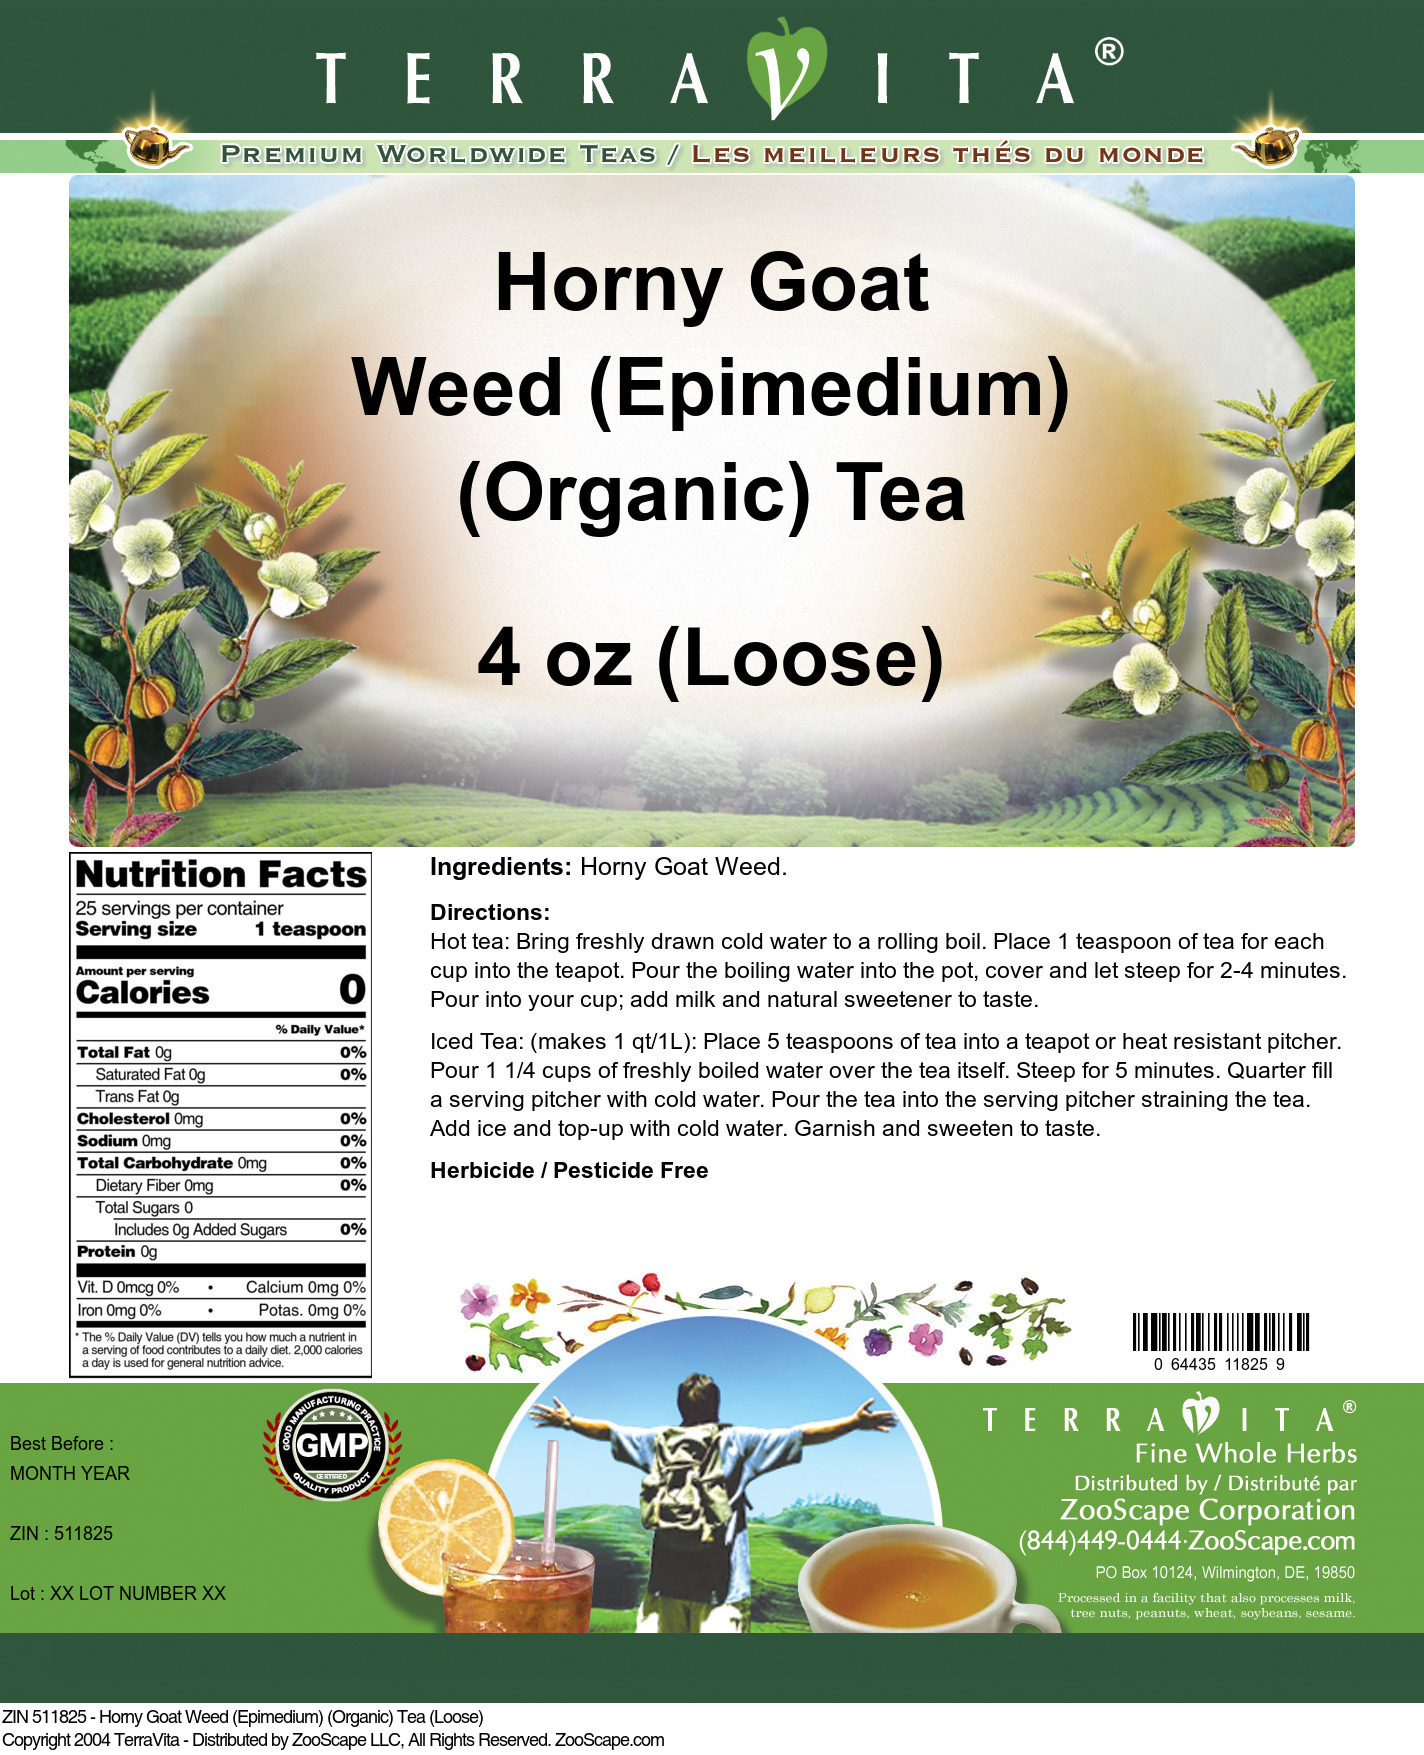 Horny Goat Weed (Epimedium) (Organic) Tea (Loose) - Label